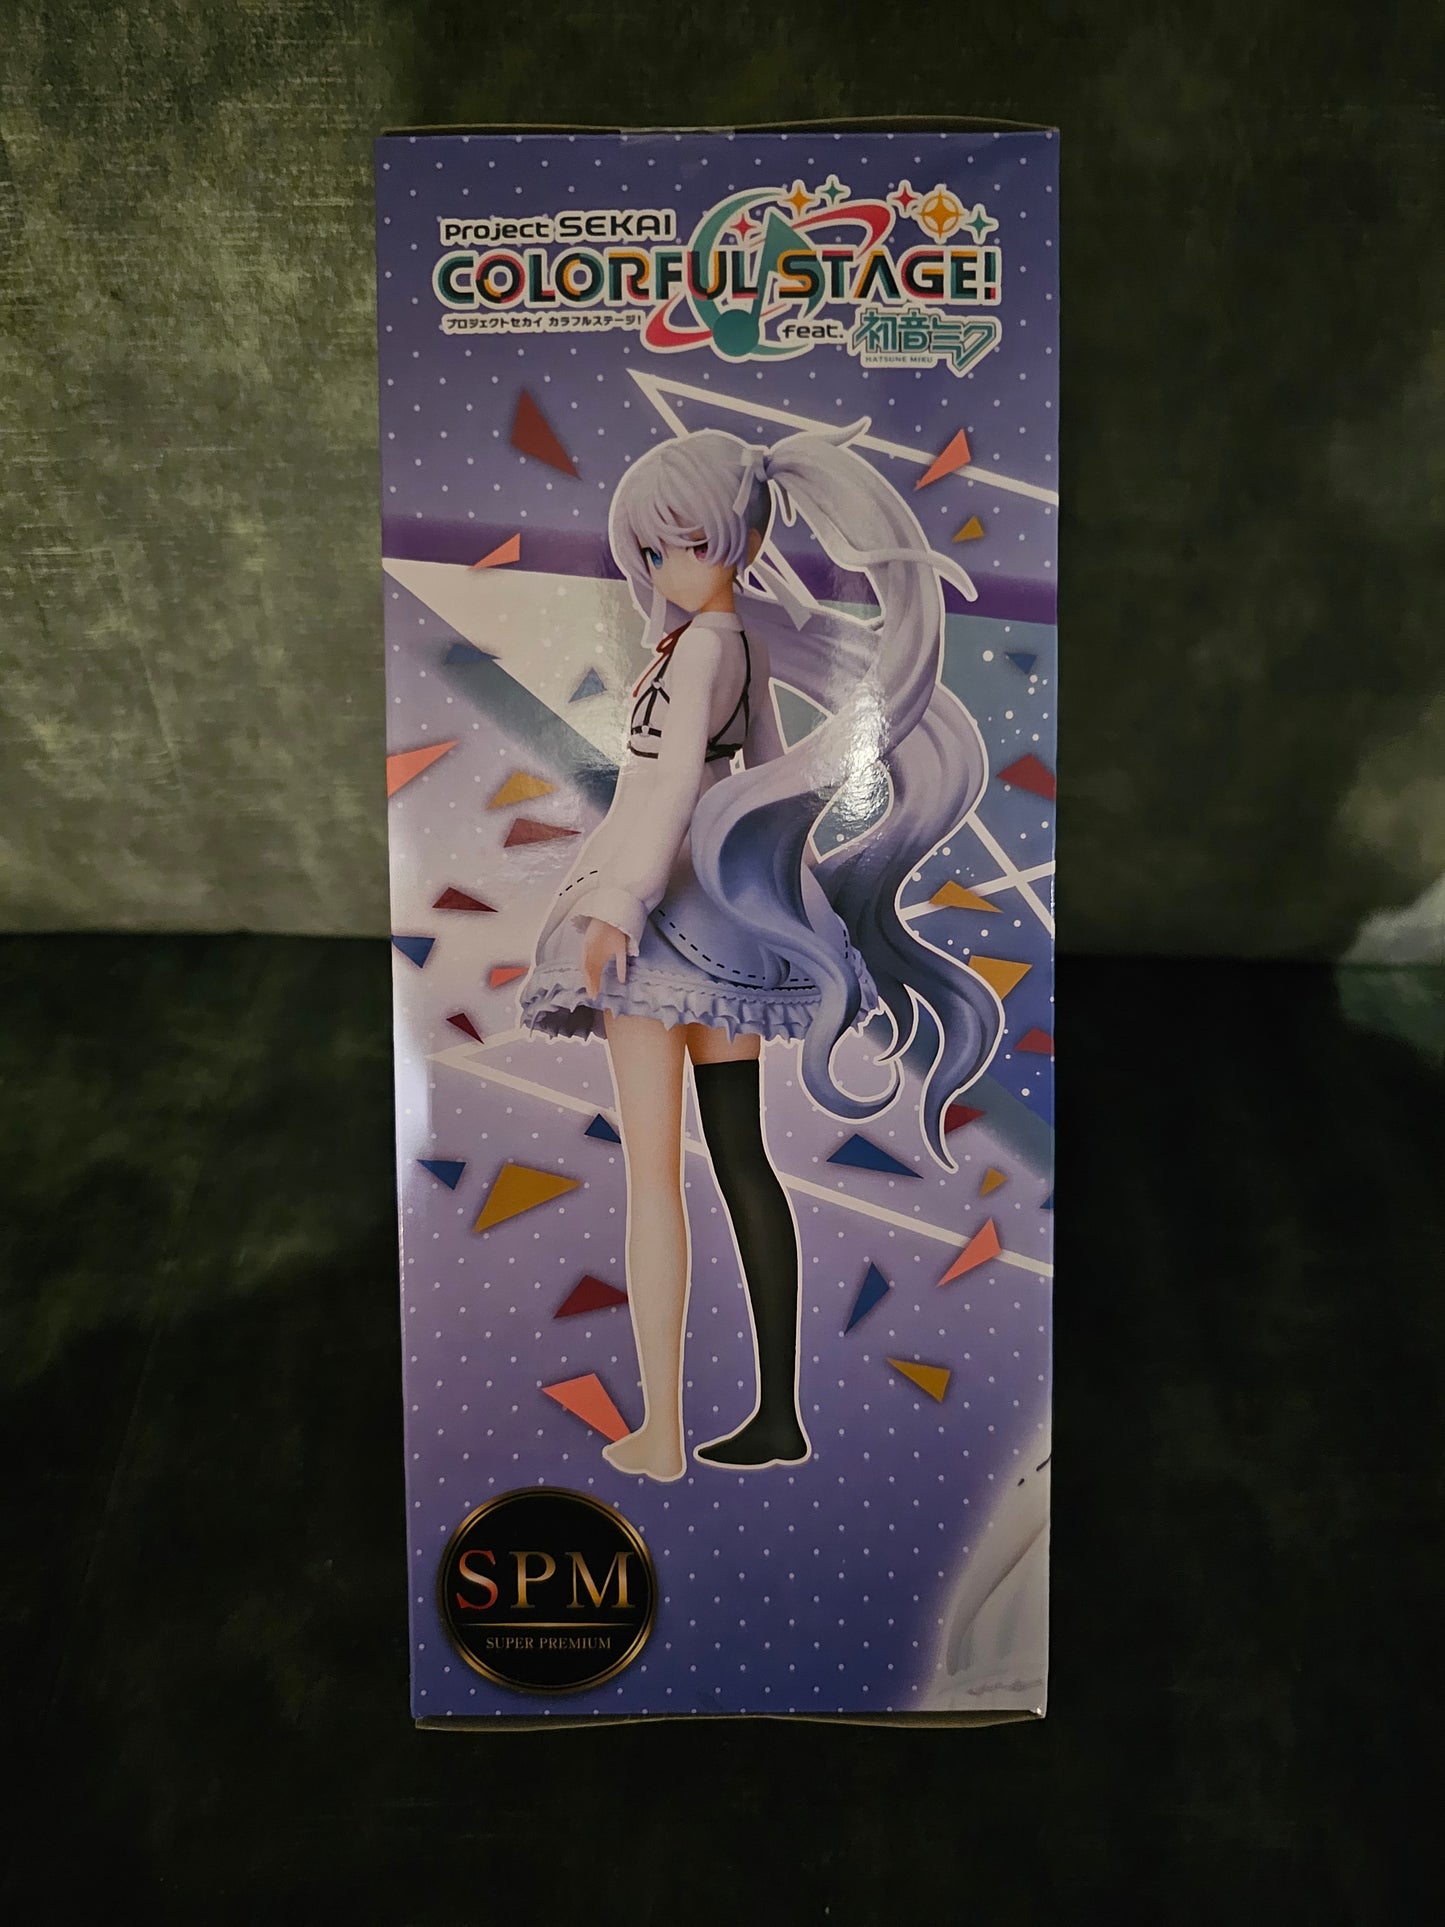 Hatsune Miku - Project Sekai: Colorful Stage! Daremo Inai Sekai / Empty Sekai - Sega Prize